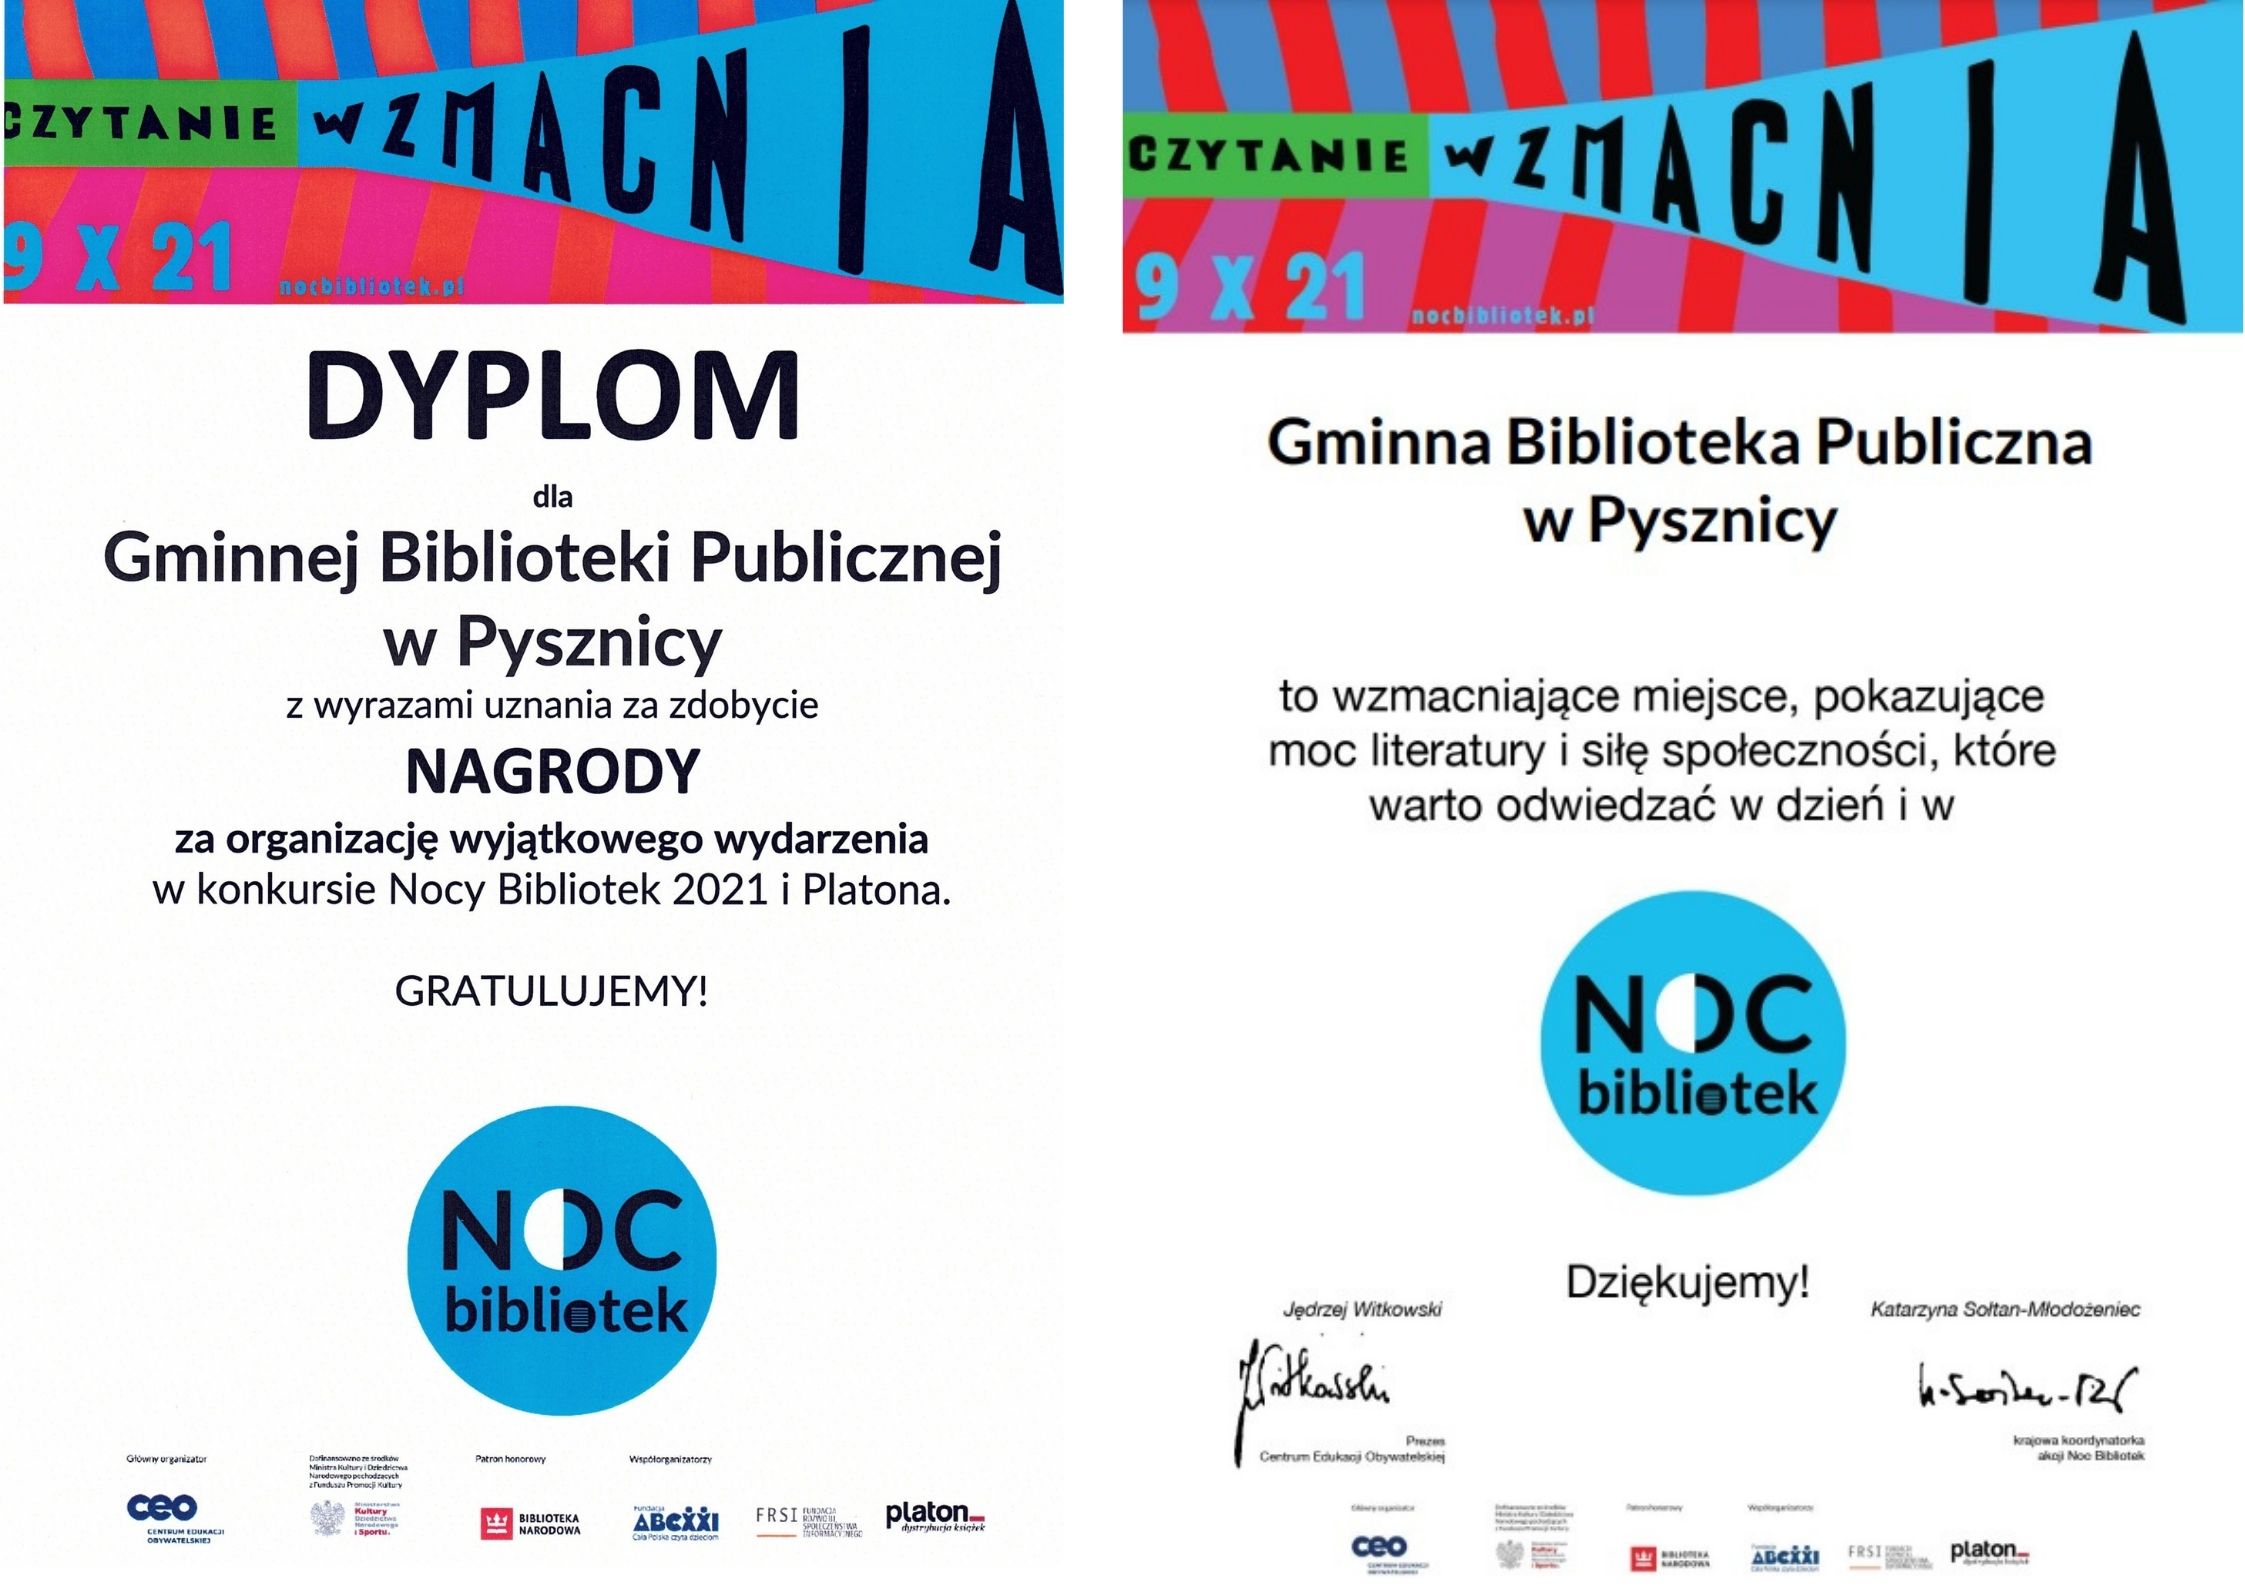 Nagroda w konkursie Nocy Bibliotek 2021 i Platona